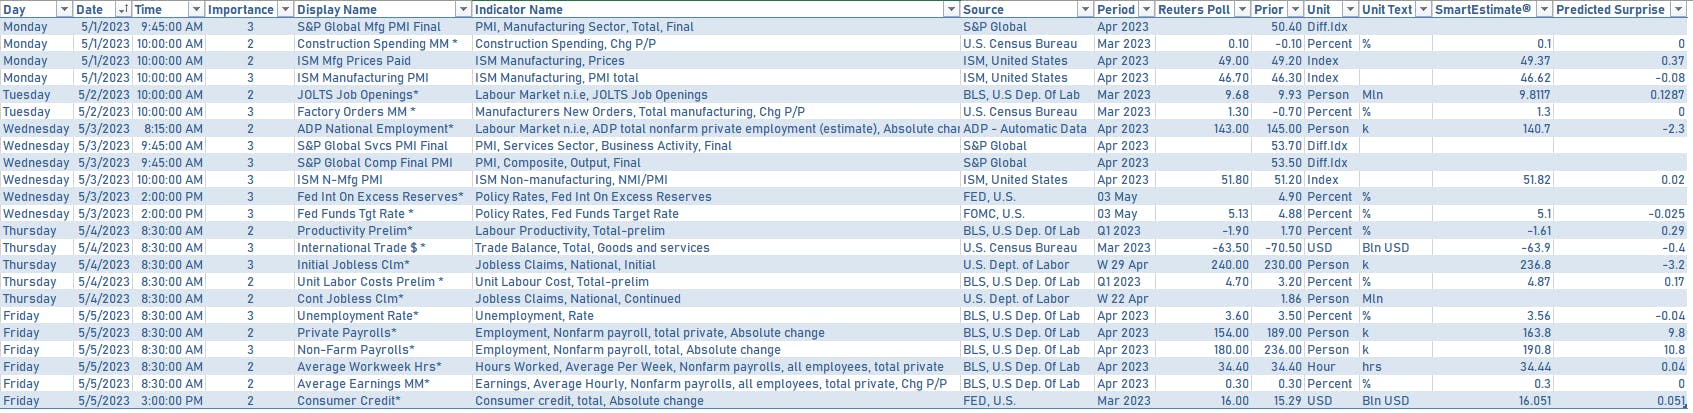 US economic data next week | Sources: phipost.com, Refinitiv data